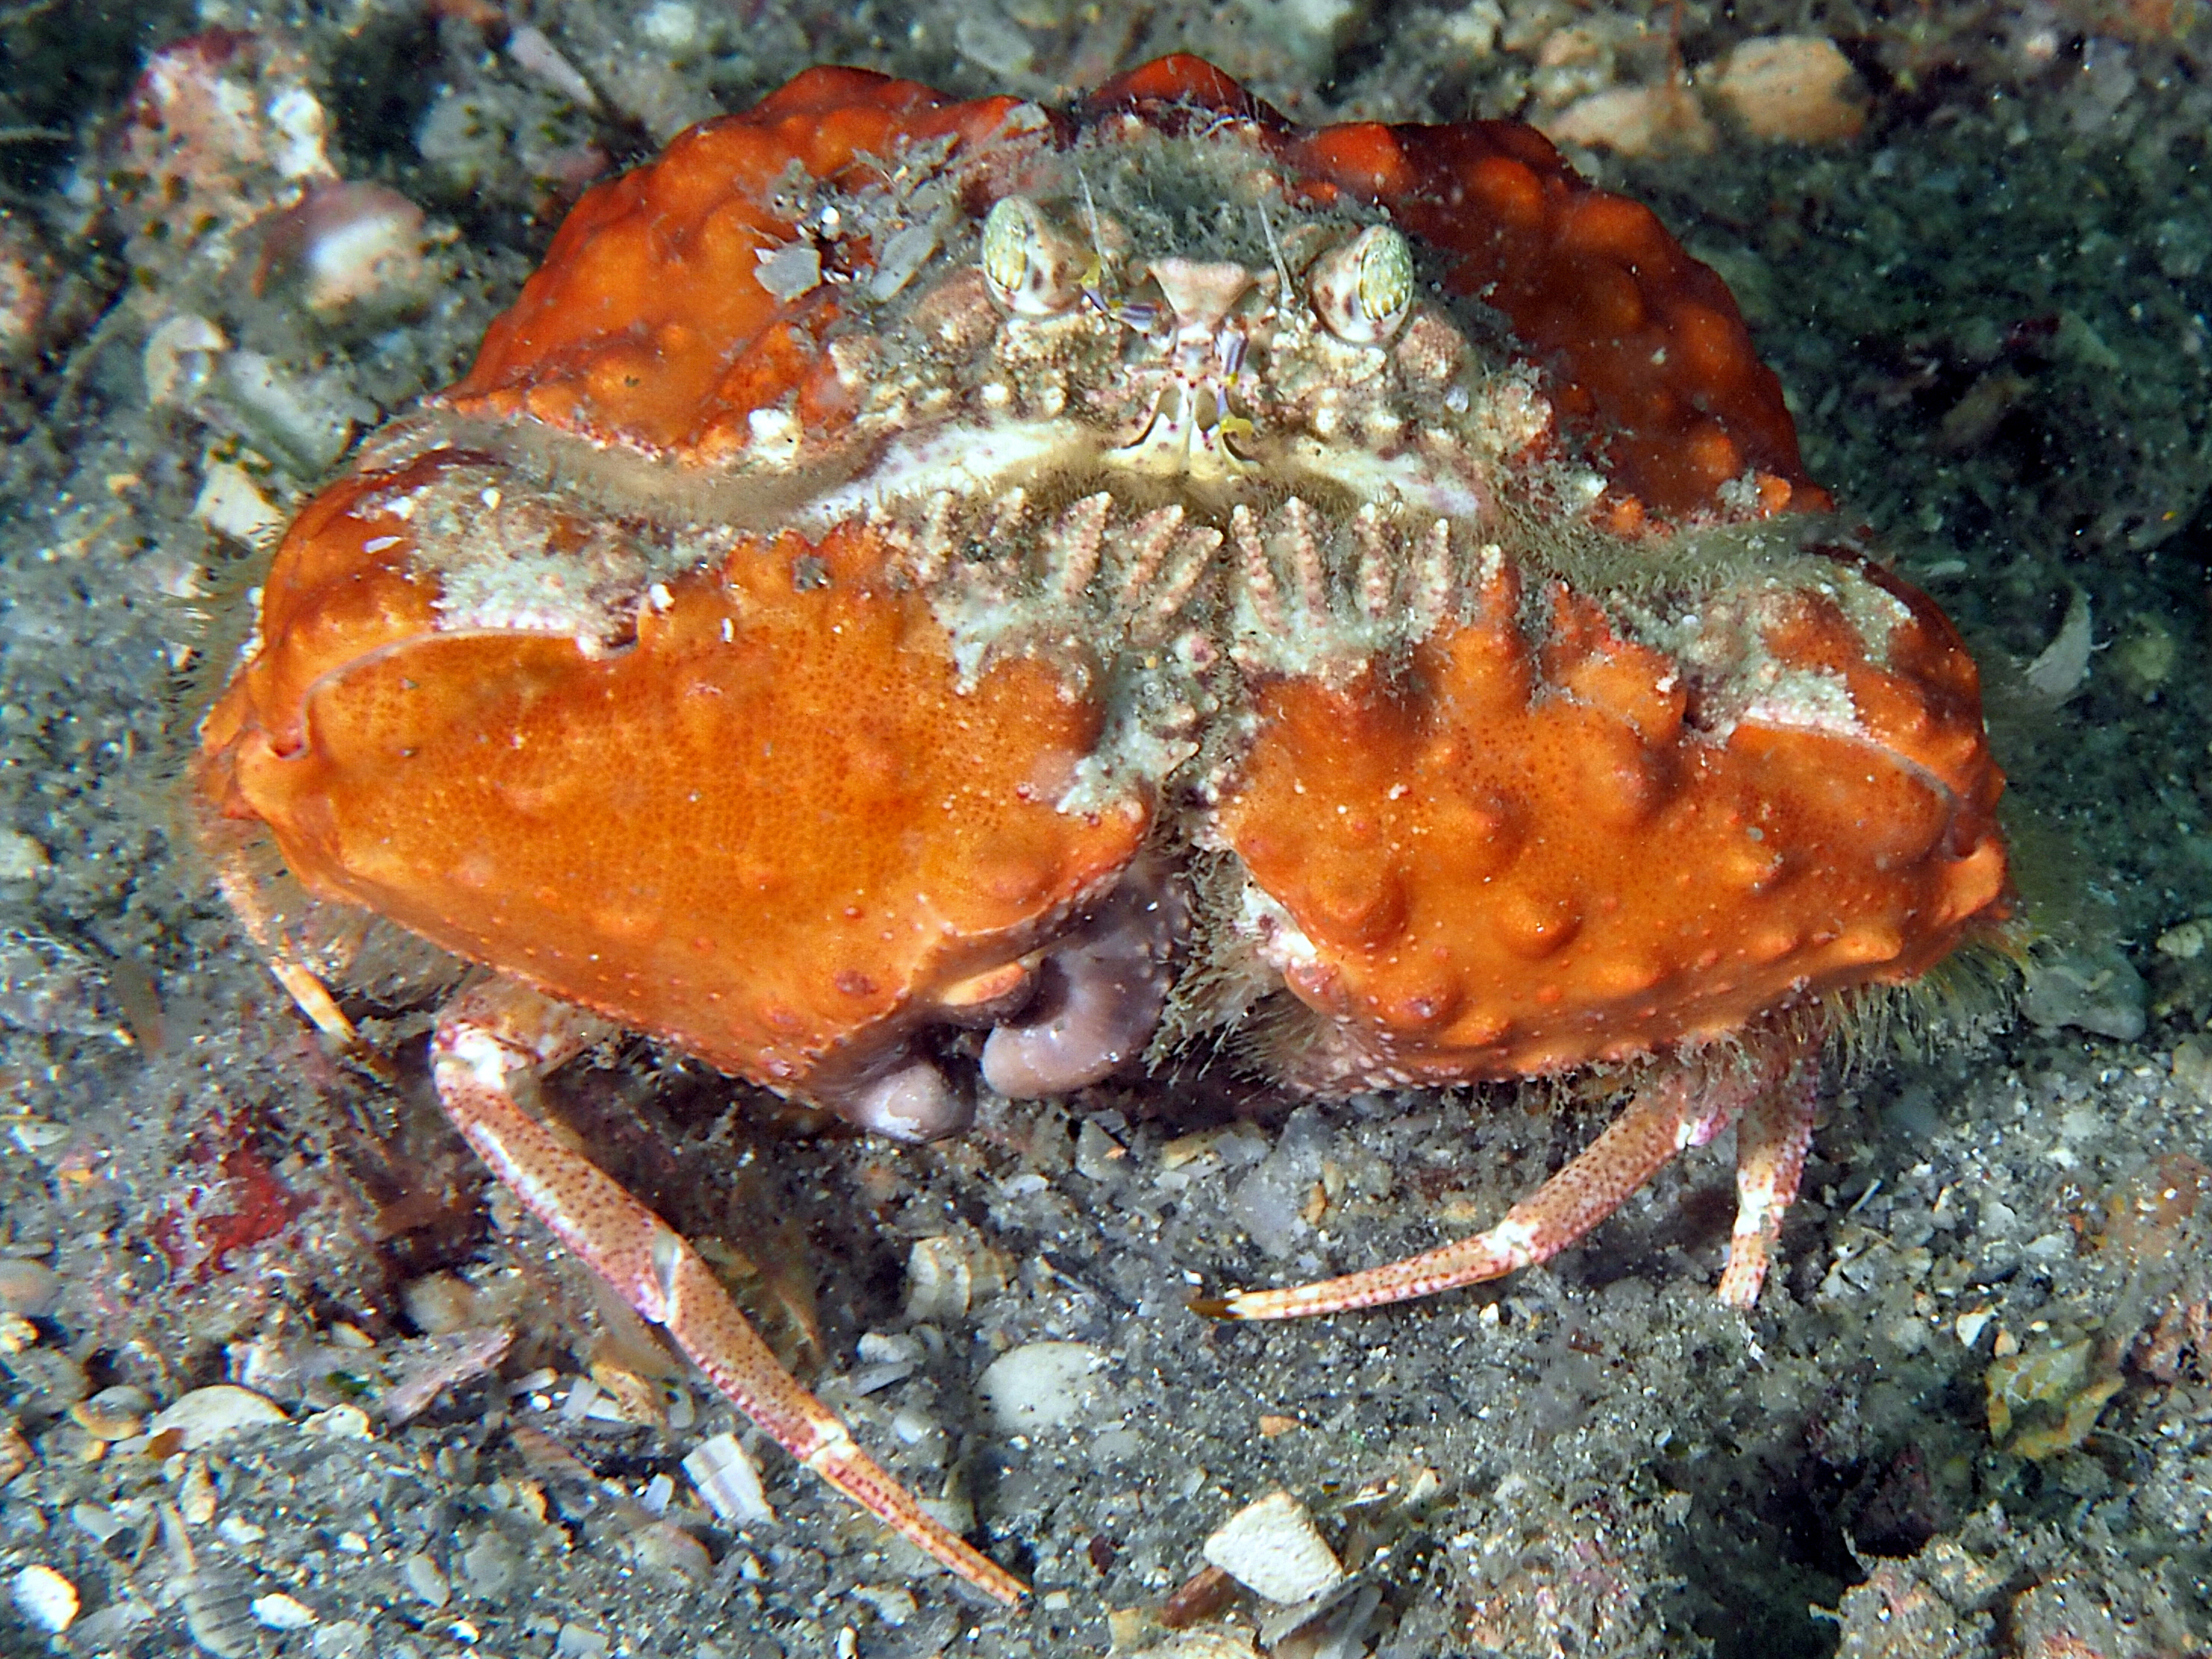 Yellow Box Crab - Calappa sulcata